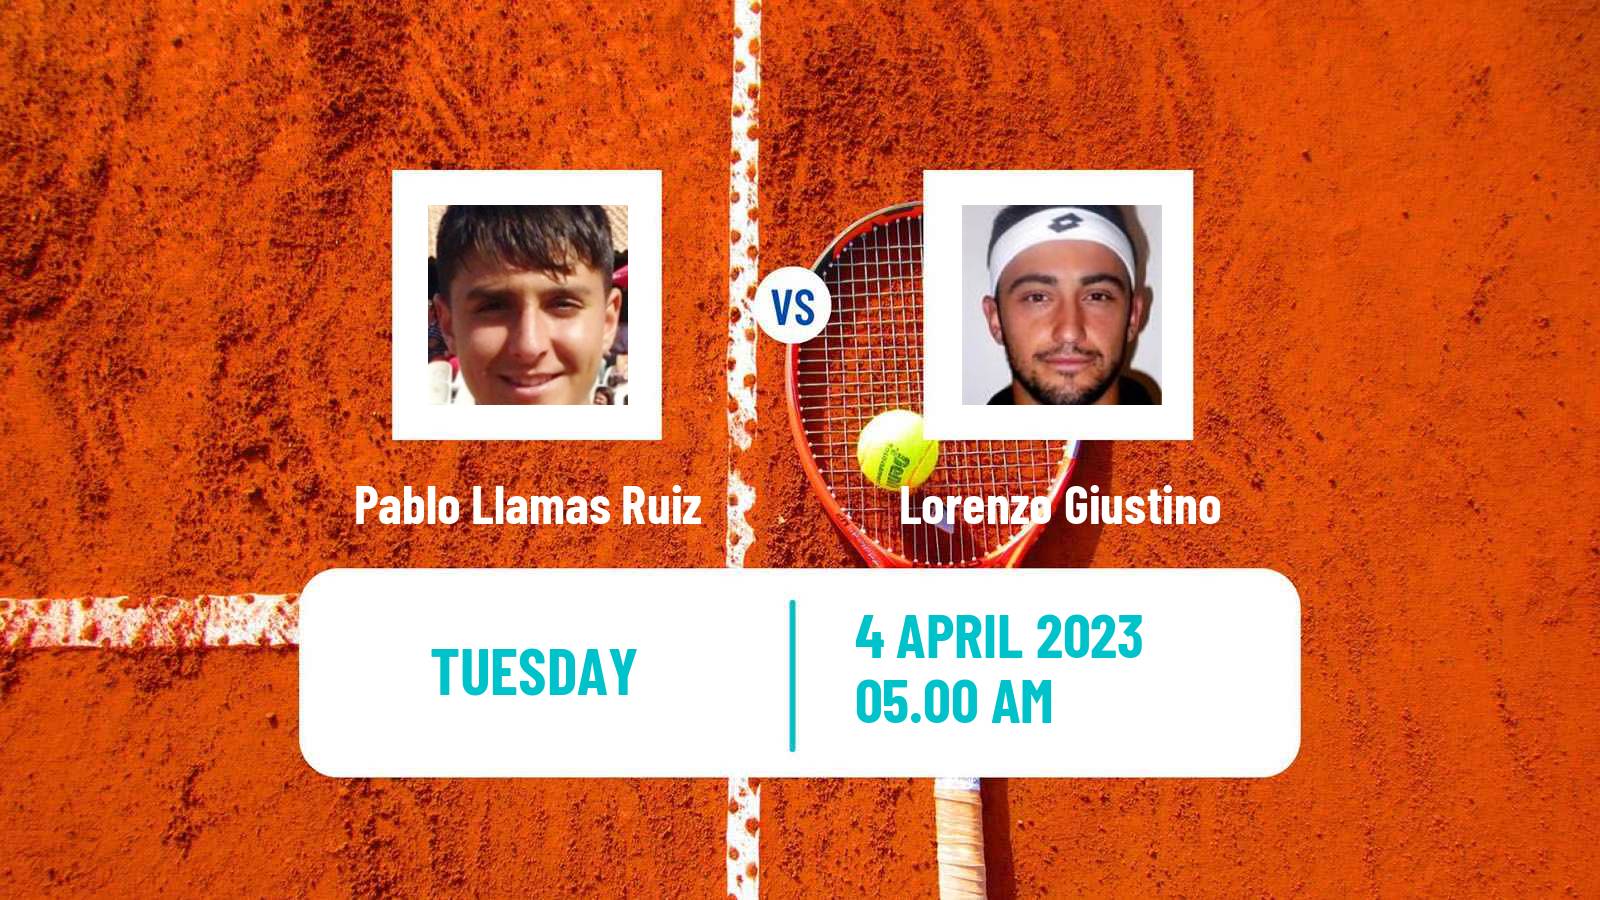 Tennis ATP Challenger Pablo Llamas Ruiz - Lorenzo Giustino